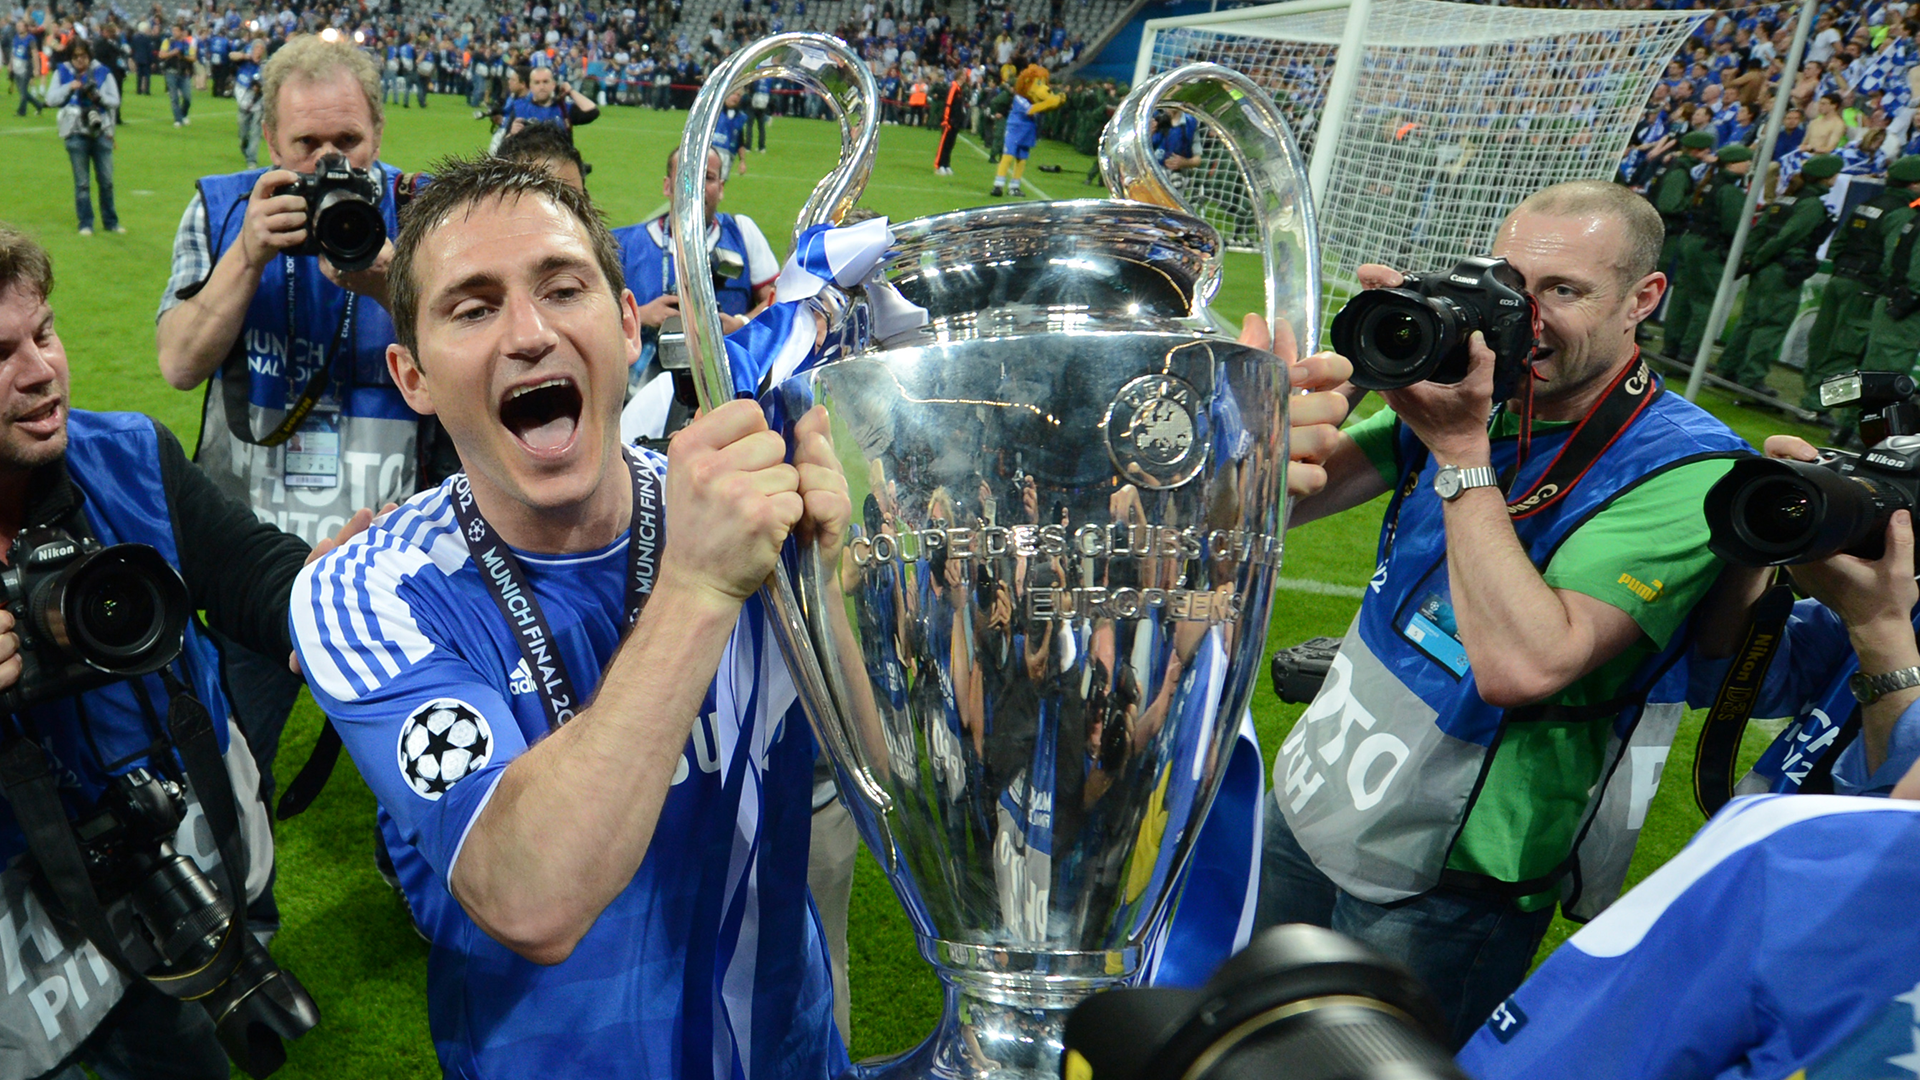 Chelsea 2012 Champions League winners